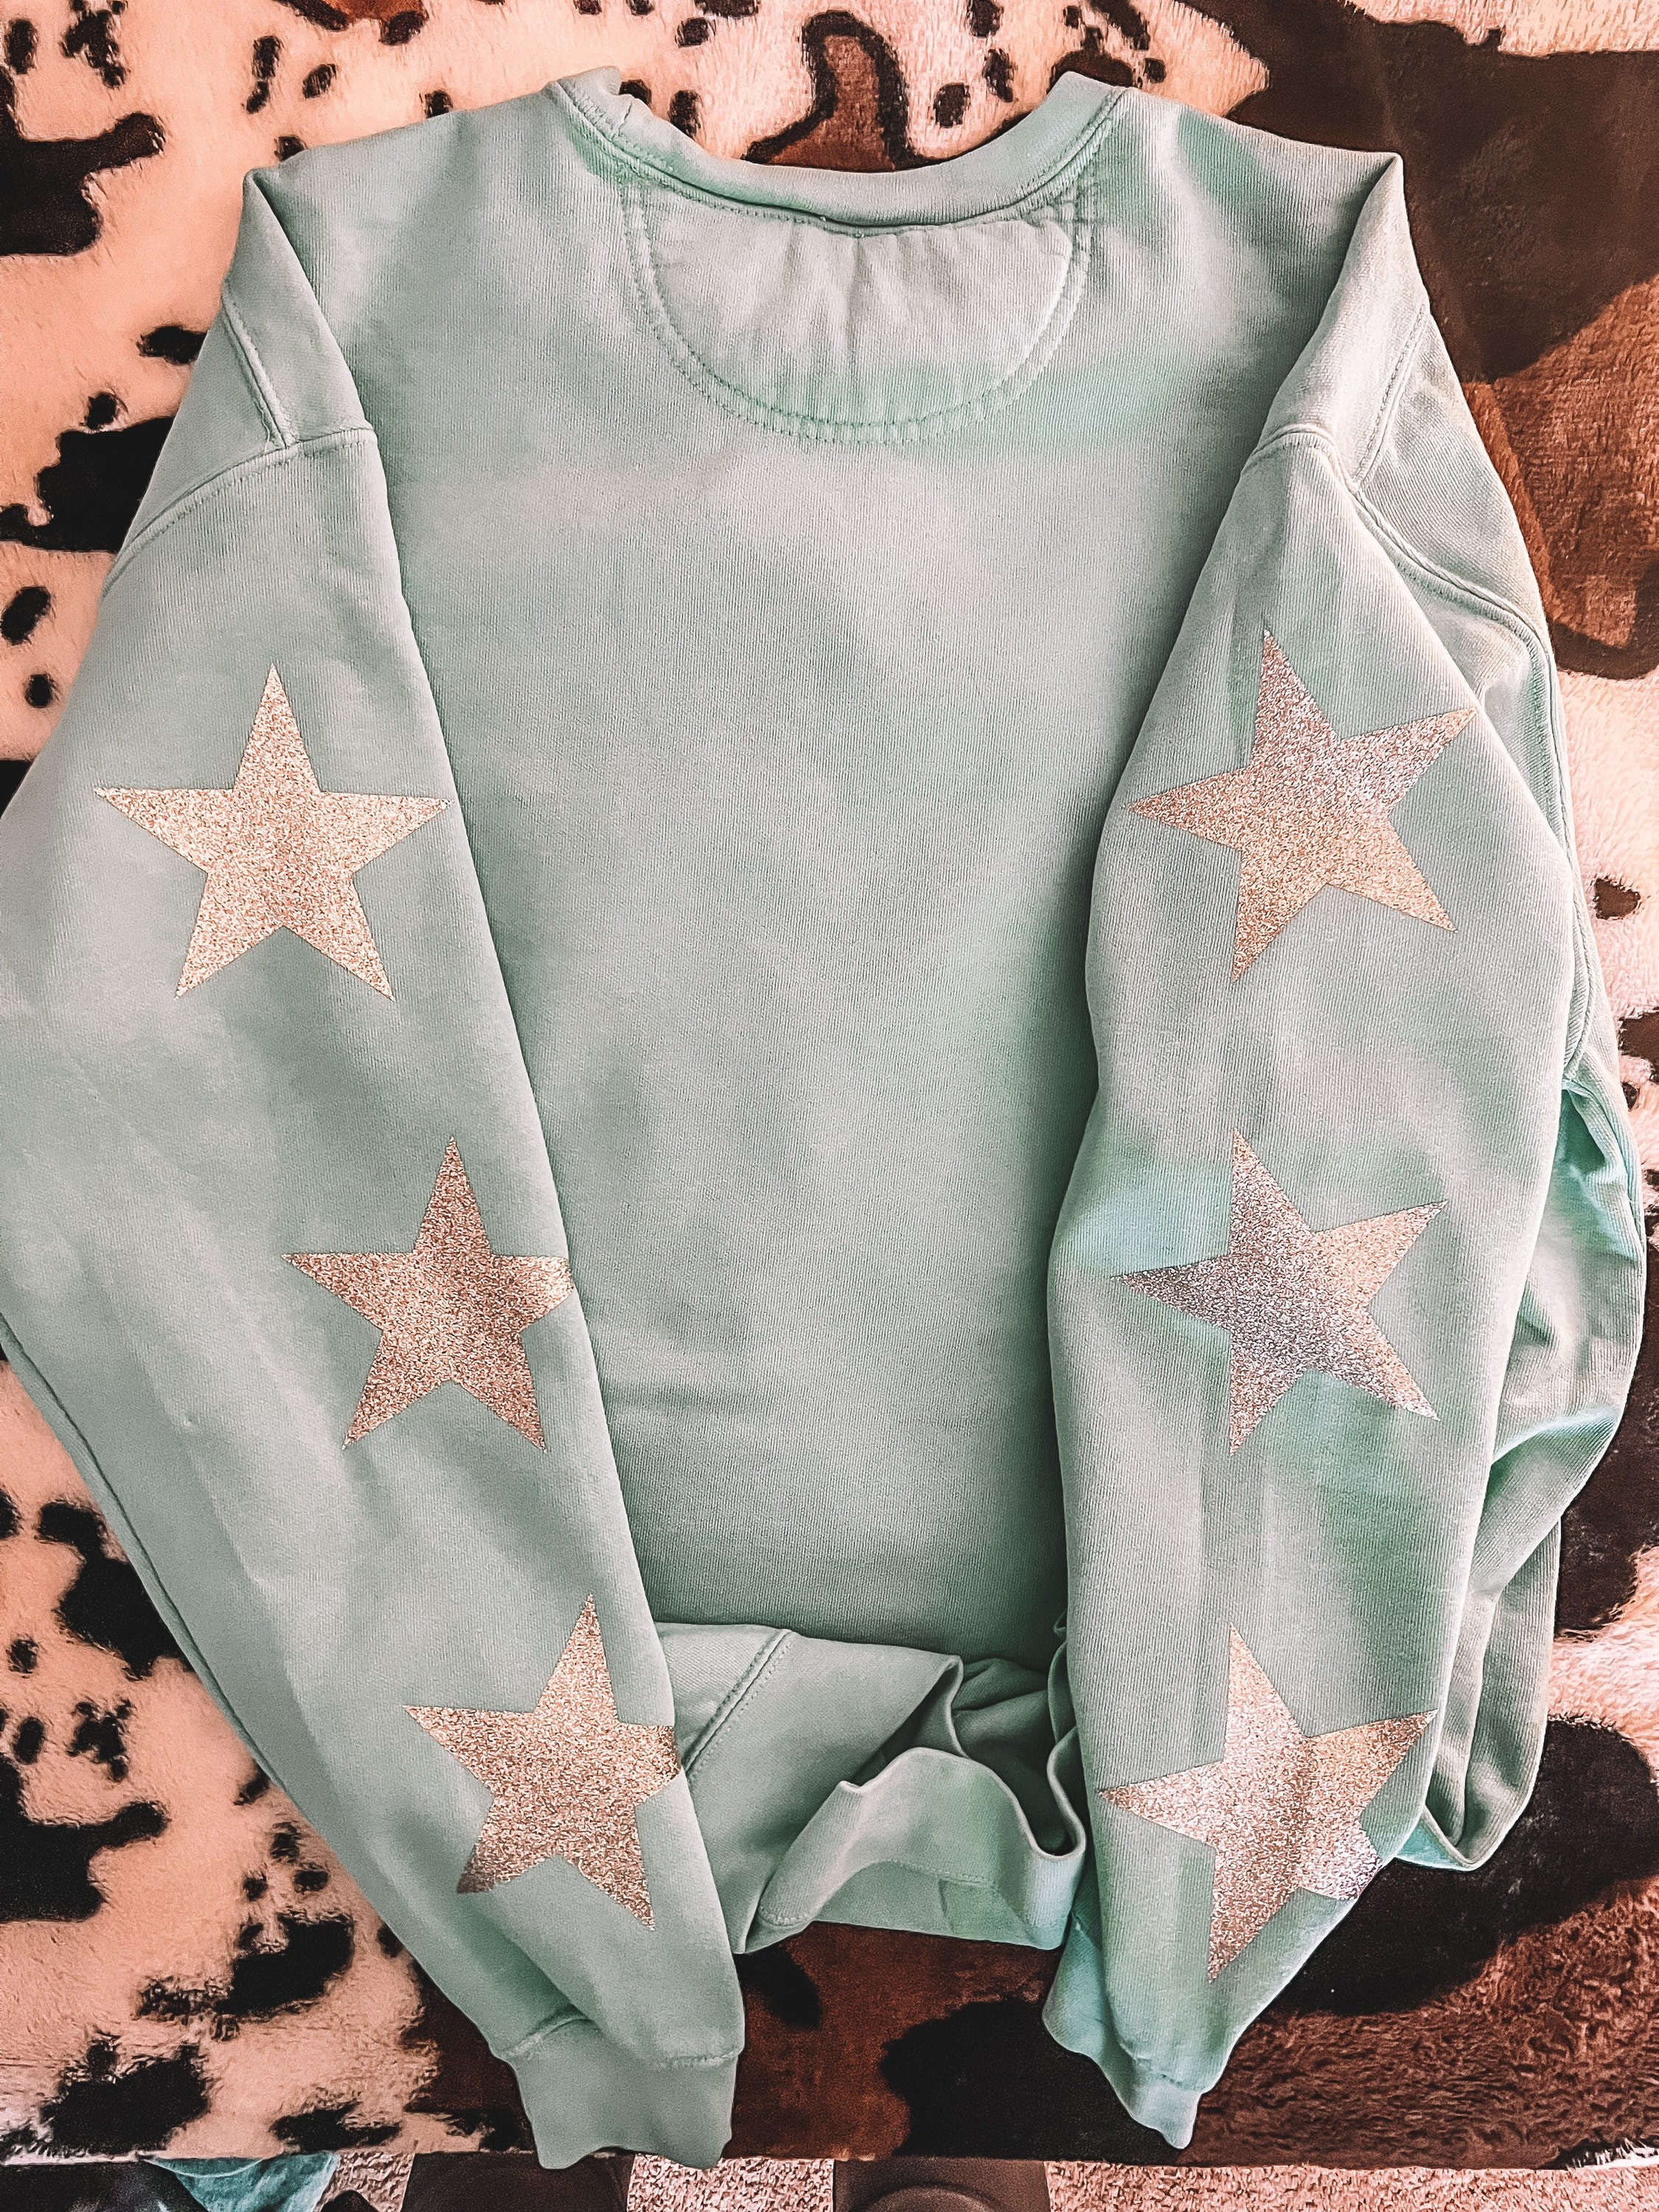 Star Sleeve Sweatshirt/ Stars/ Crewneck/ Glitter Star Sleeve/ 